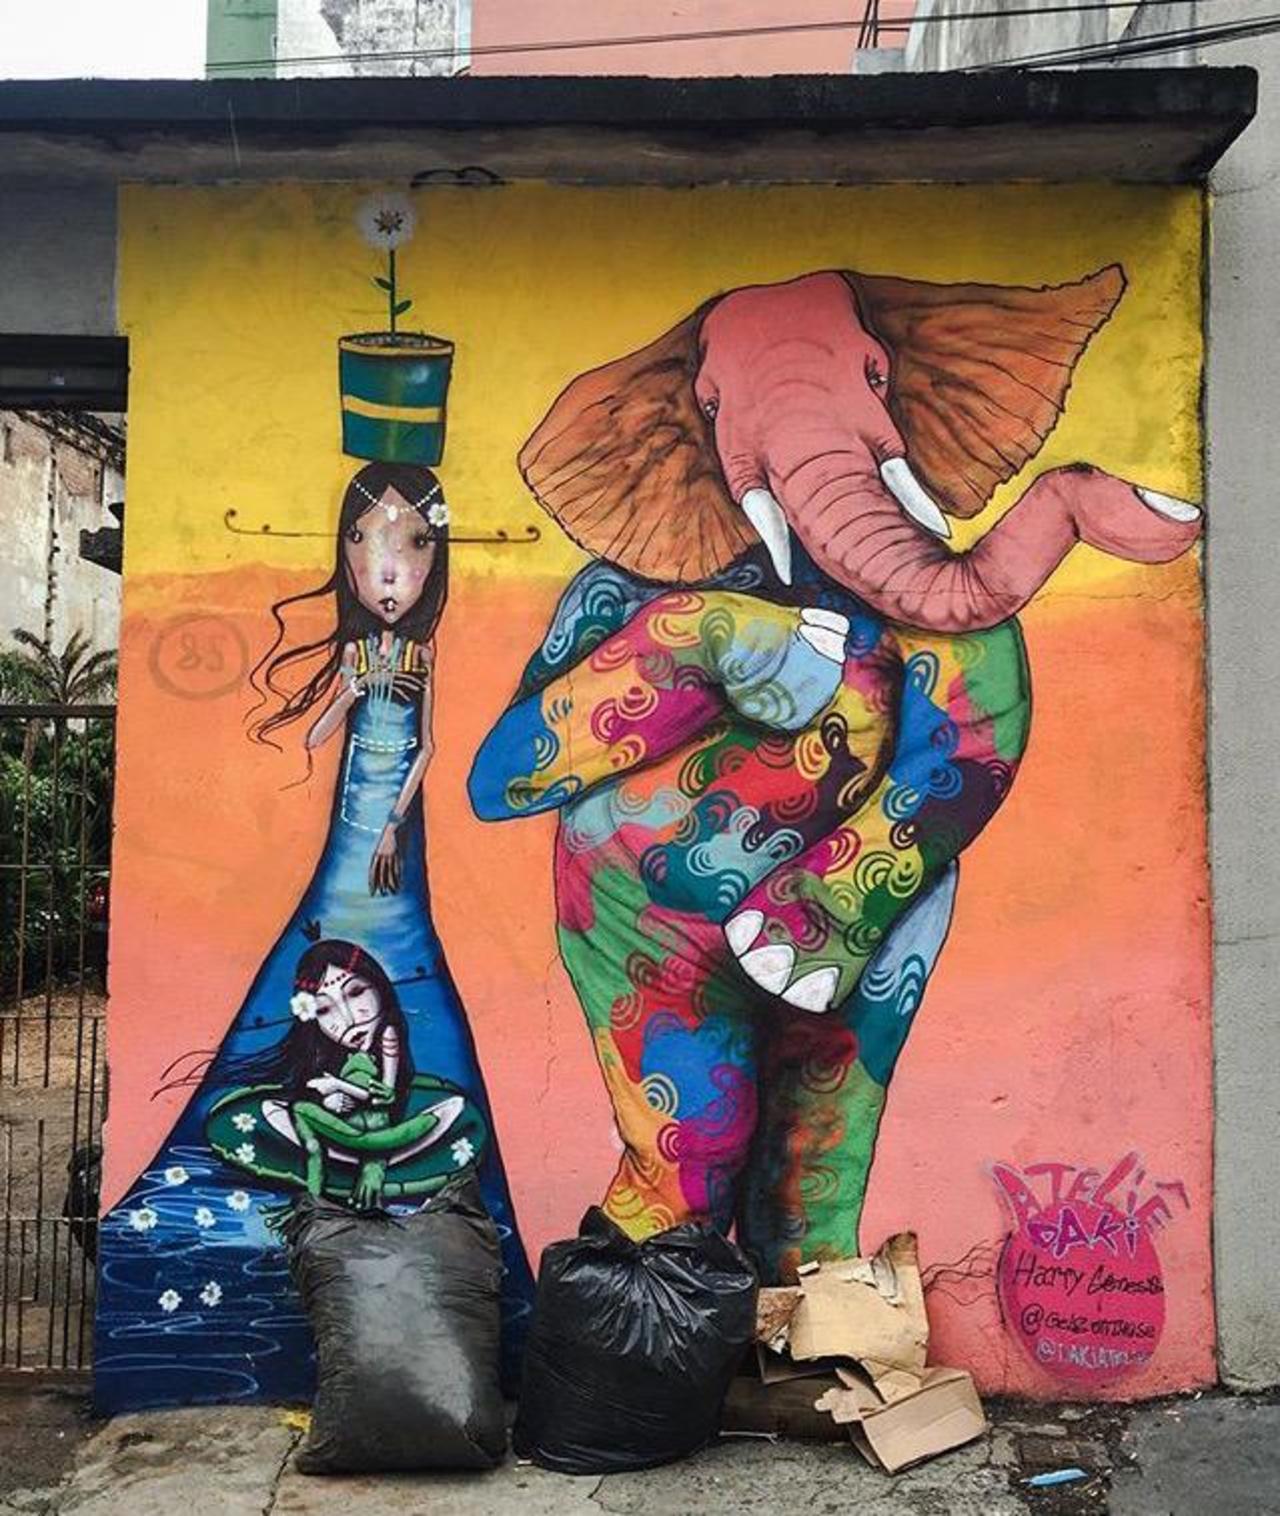 Street Art by Harry Geneis & Gelson in São Paulo #art #mural #graffiti #streetart http://t.co/SlLbhuMZfD … … …… … http://twitter.com/GoogleStreetArt/status/648016473831645184/photo/1/large?utm_source=fb&utm_medium=fb&utm_campaign=charlesjackso14&utm_content=648021465040863233